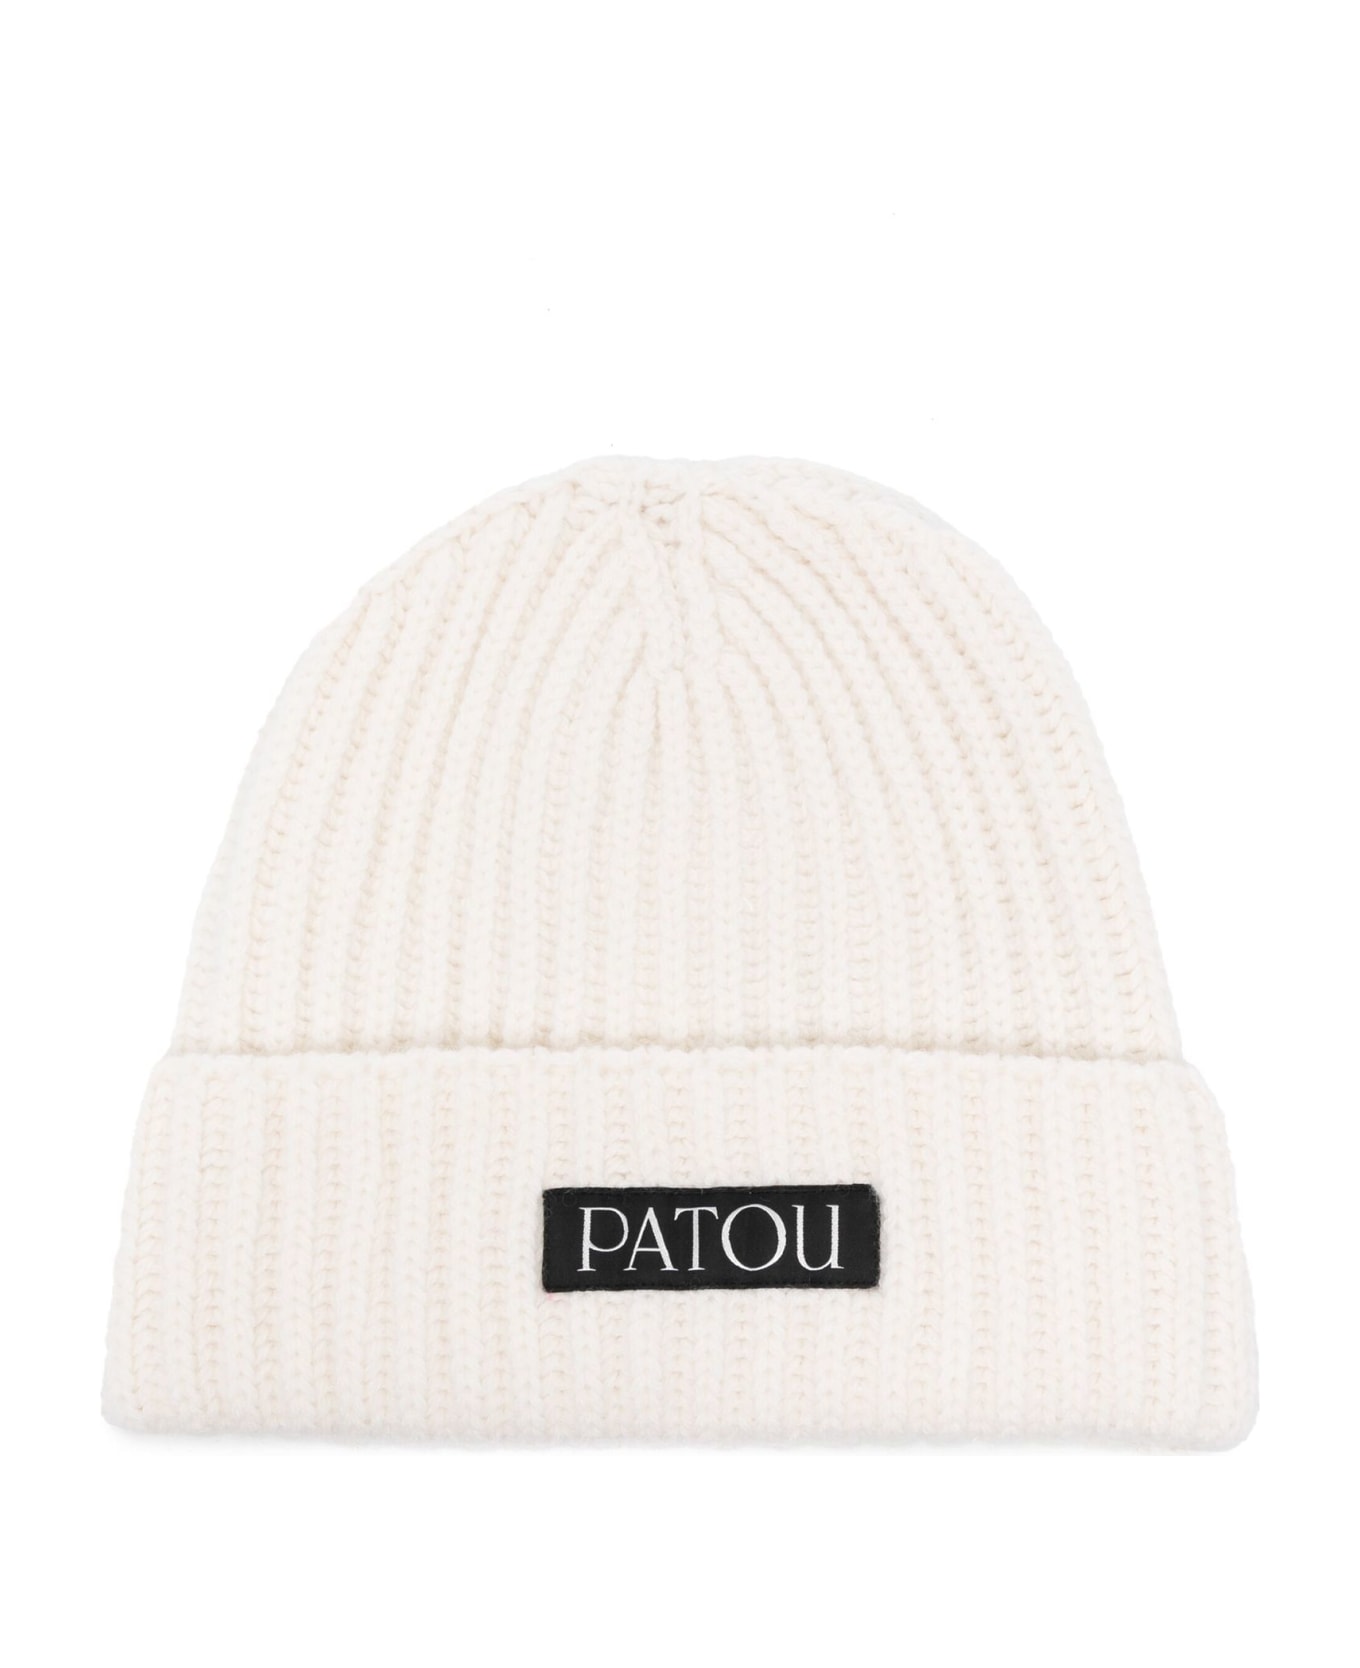 Patou White And Black Wool-cashmere Blend Beanie - White 帽子